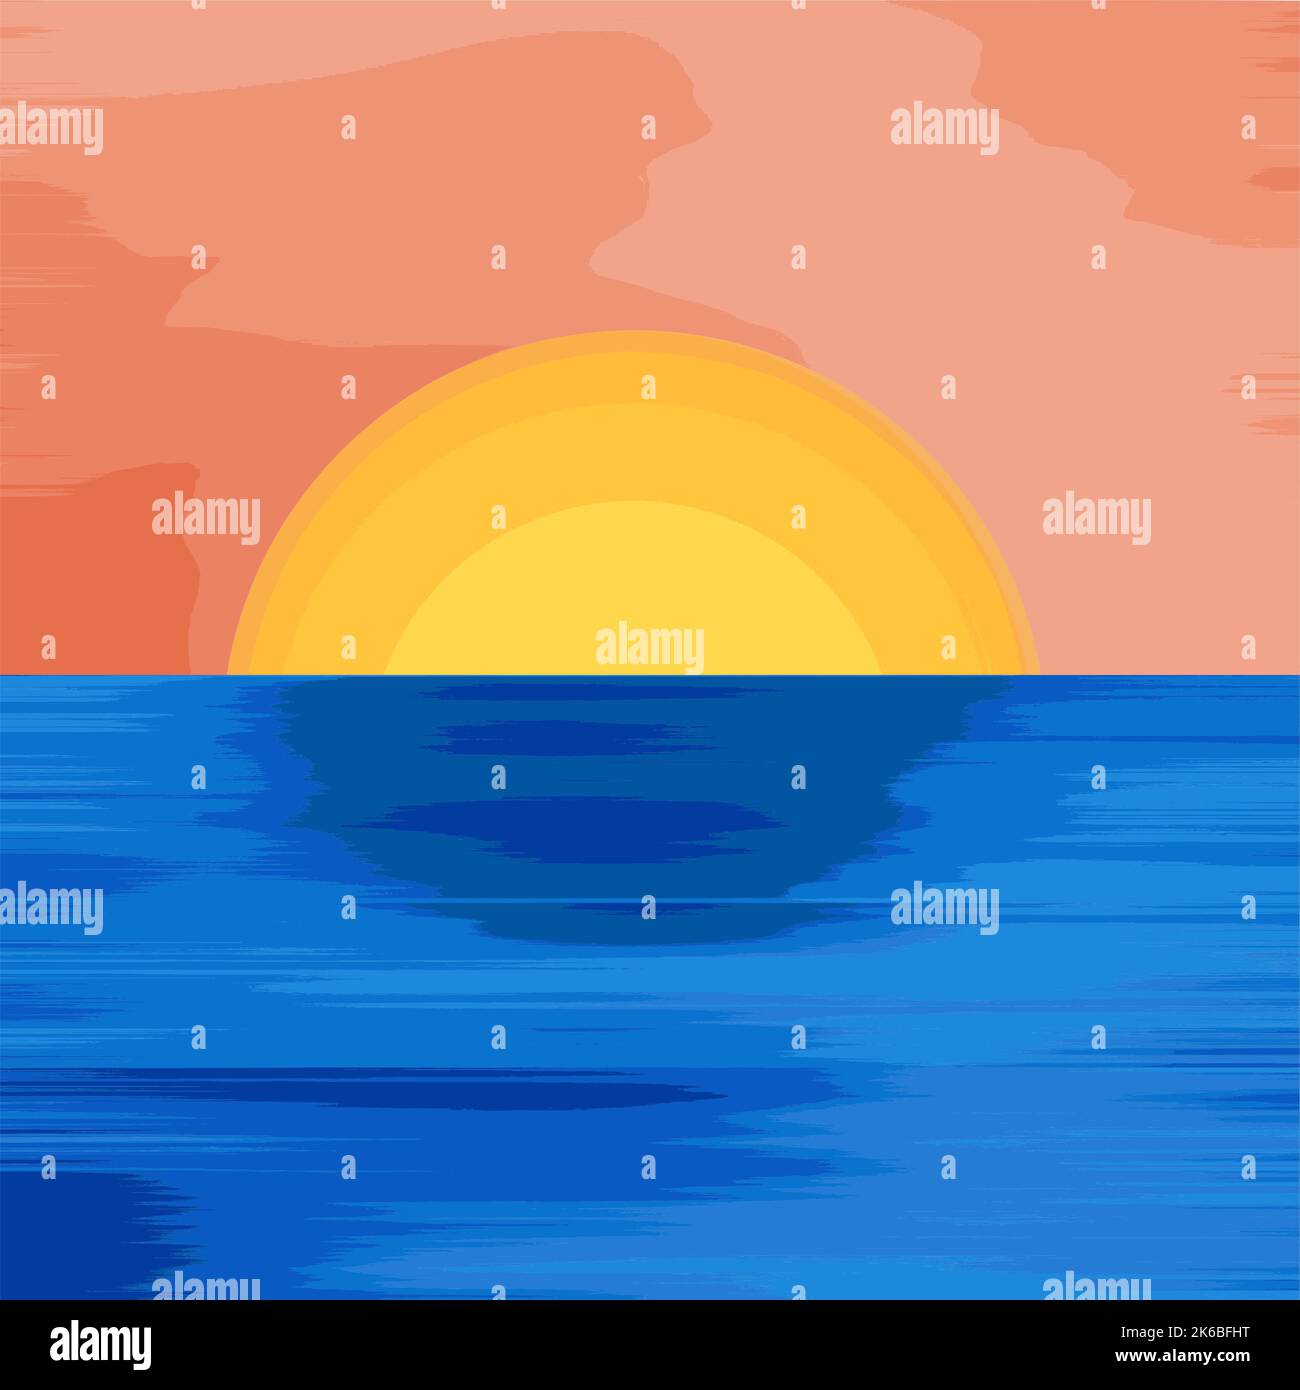 Abstrakte Landschaftskunst Illustration Horizont Himmel Ozean Sonne Sonnenuntergang Vektor - Blau und Orange Farben Stock Vektor